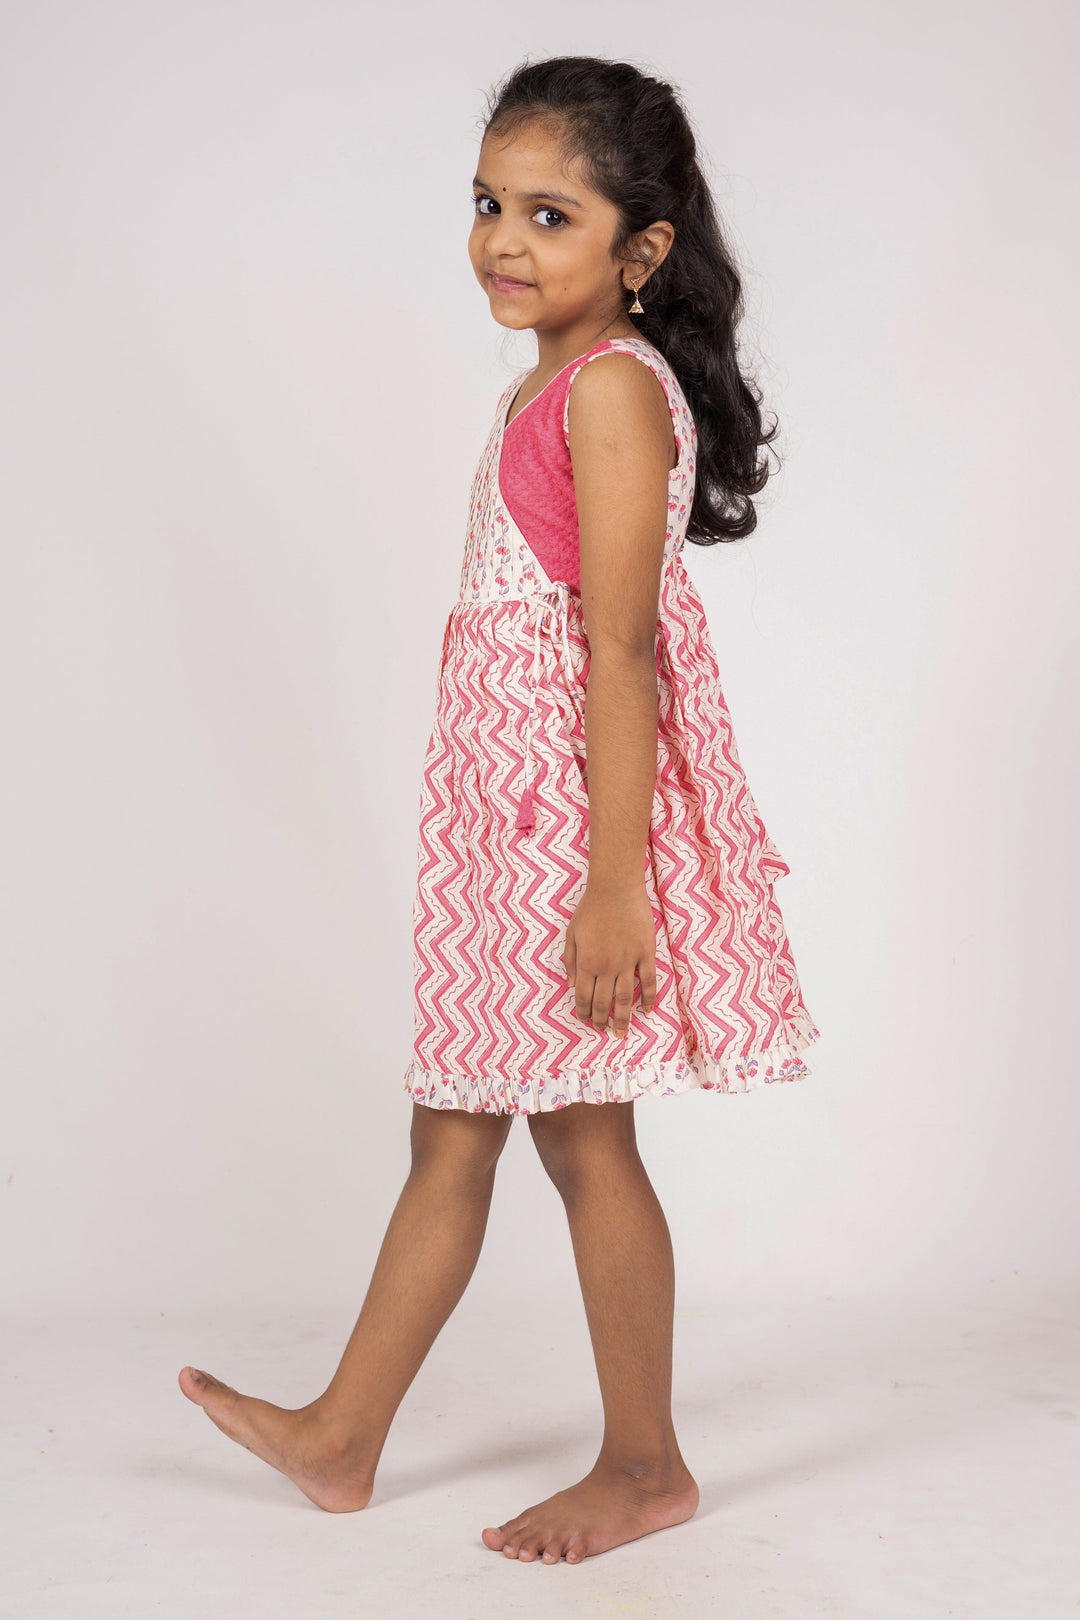 The Nesavu Baby Frock / Jhabla Pink Sleeveless Soft Cotton Gown For New Born Girl Kids With Ruffle Trims psr silks Nesavu 14 (6M) / Deeppink BFJ313